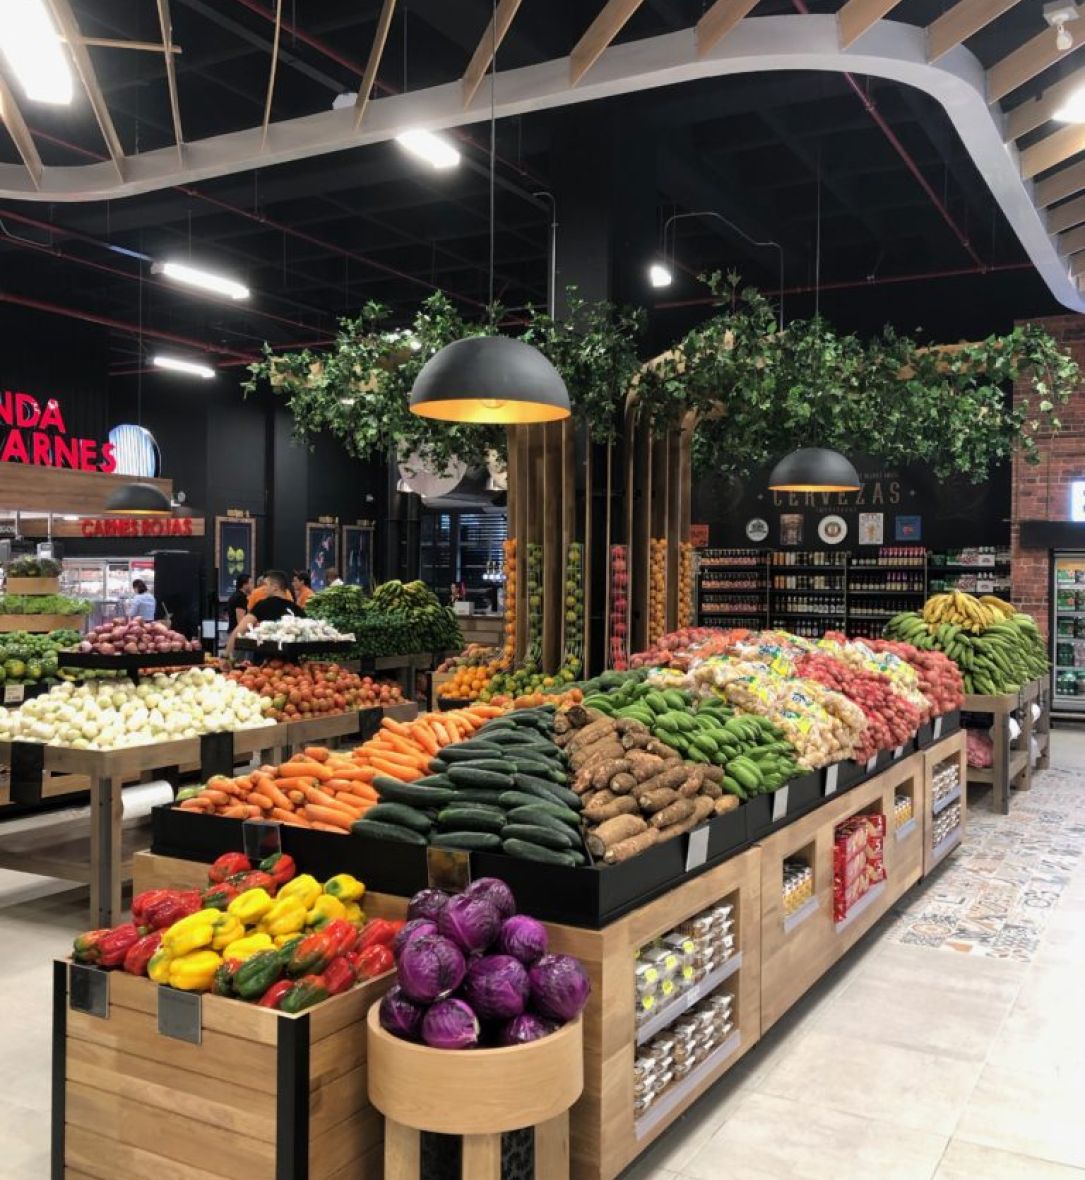 Retail design interior Euro supermercado fruits and vegetables zone gondola supermercado supermarket shelves